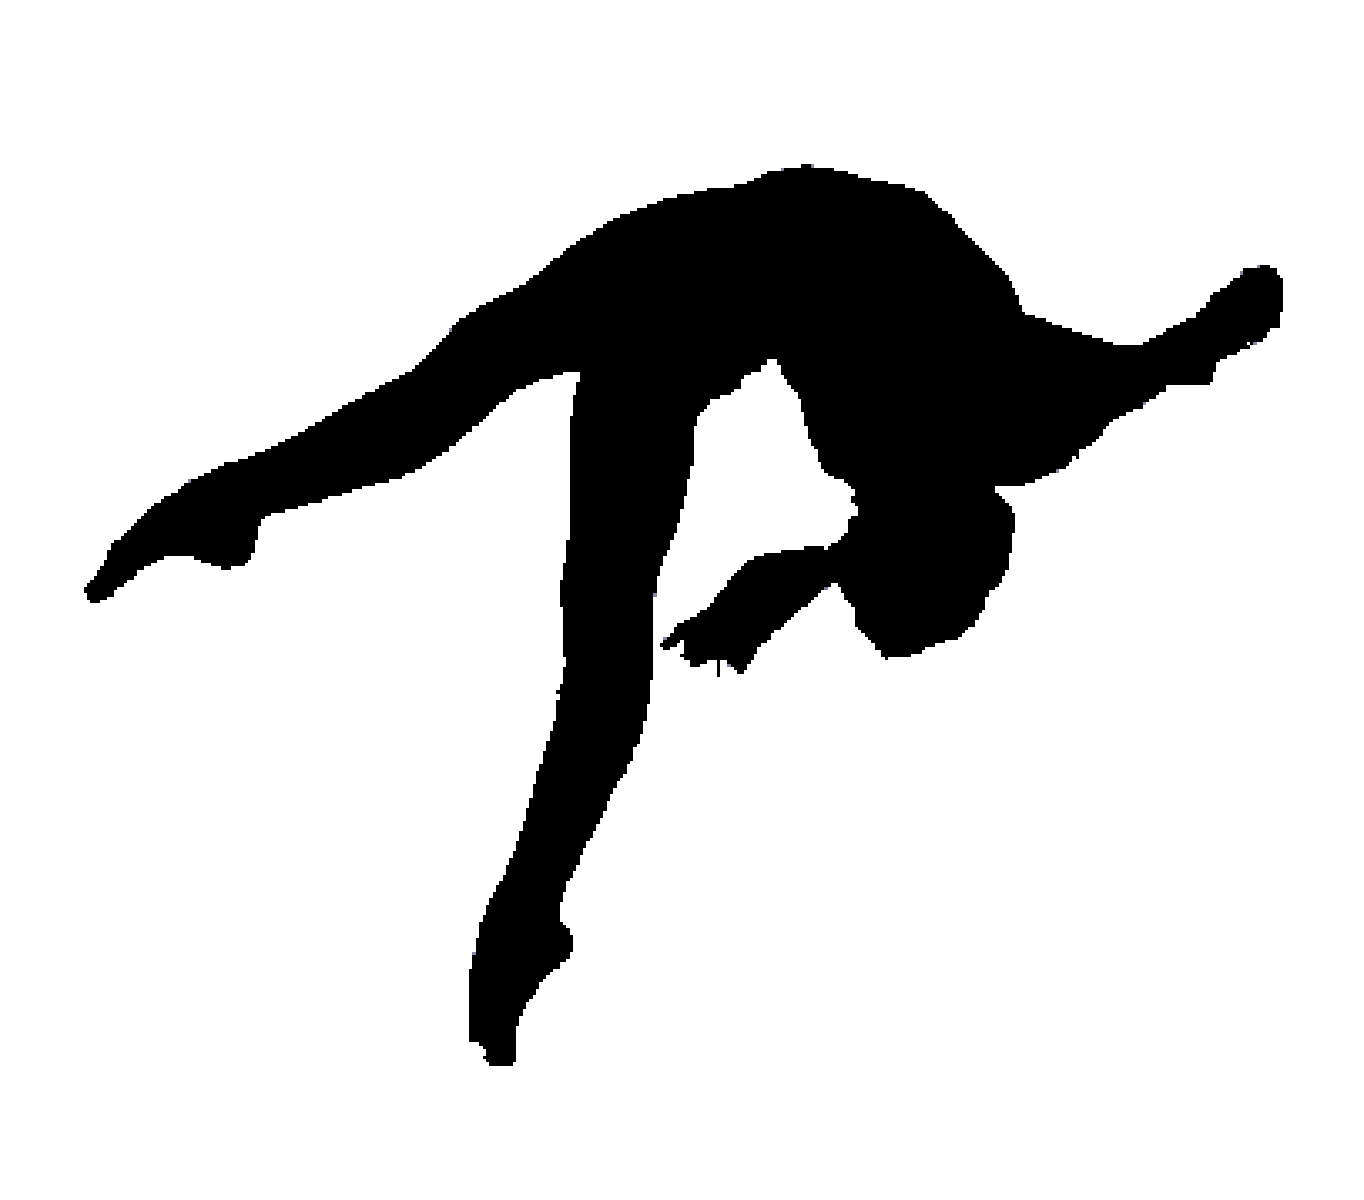 Gymnastics silhouette split.